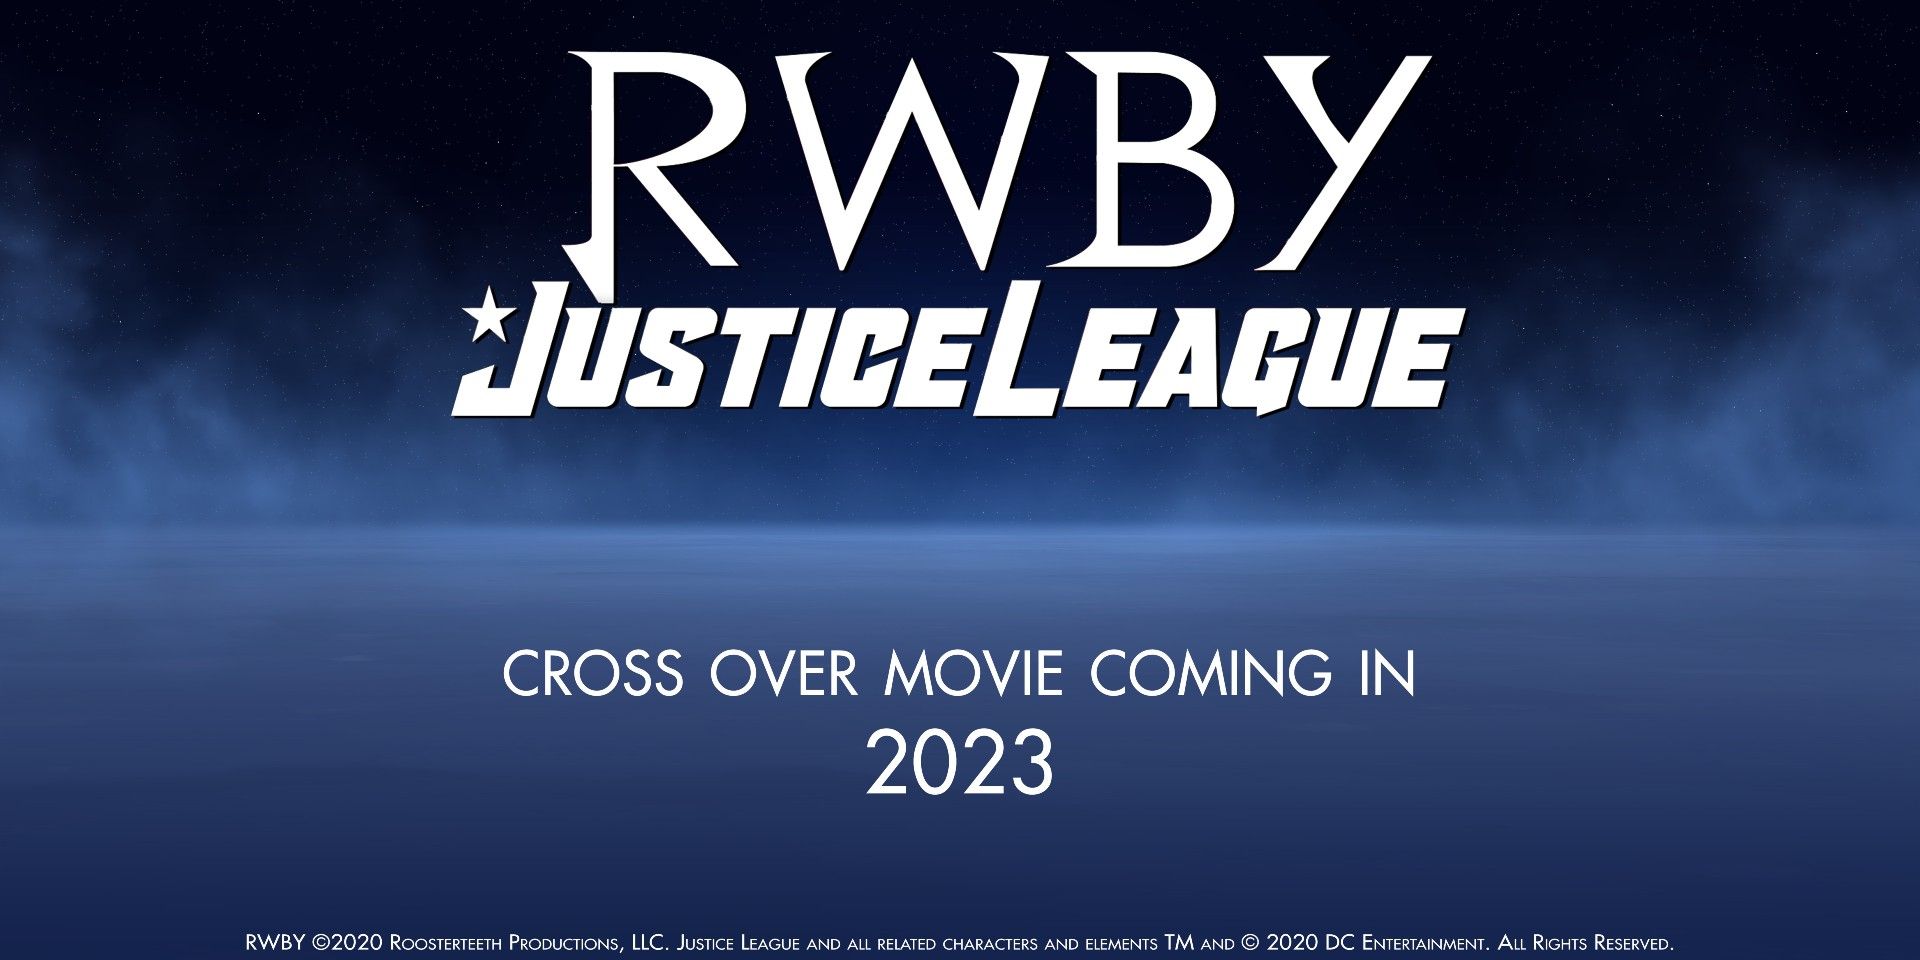 RWBY JL Movie announcement